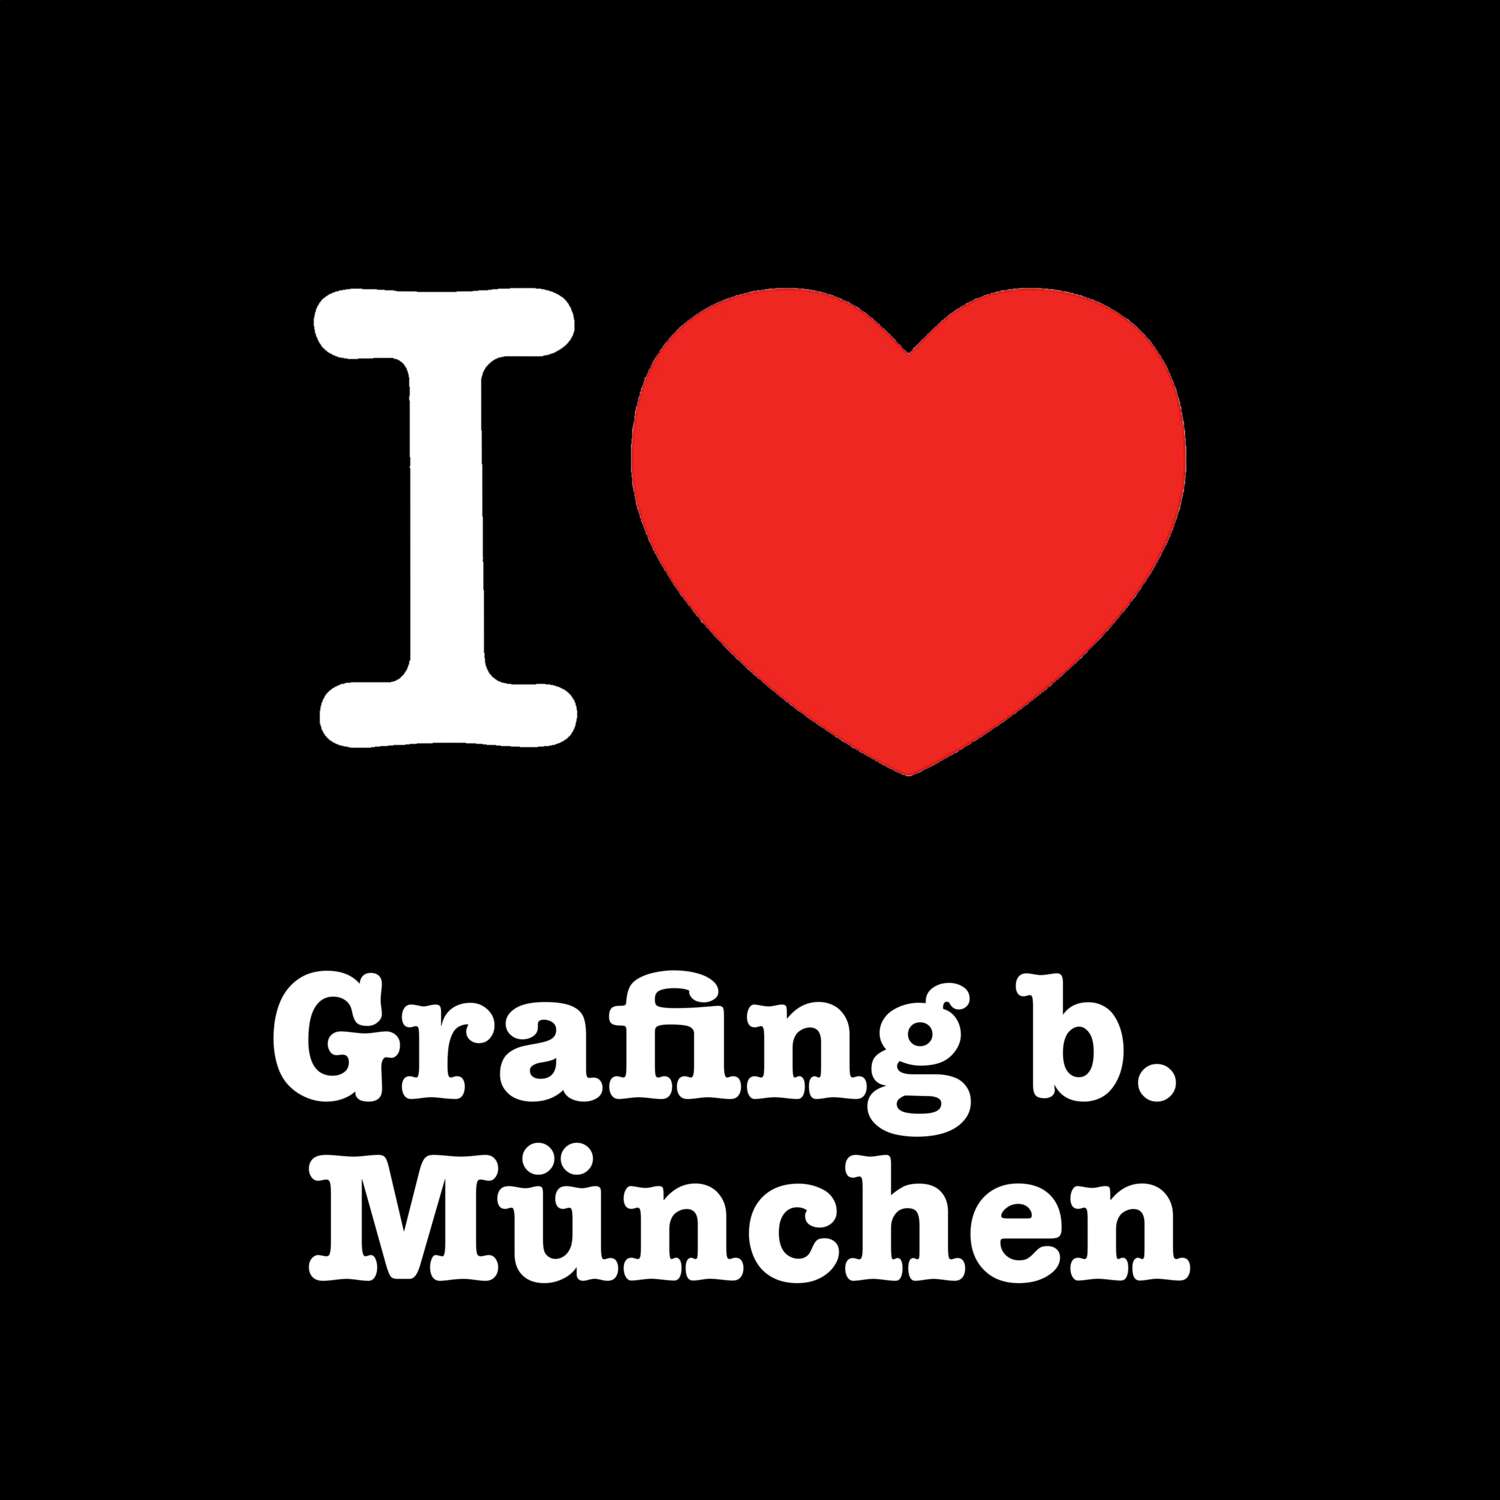 Grafing b. München T-Shirt »I love«